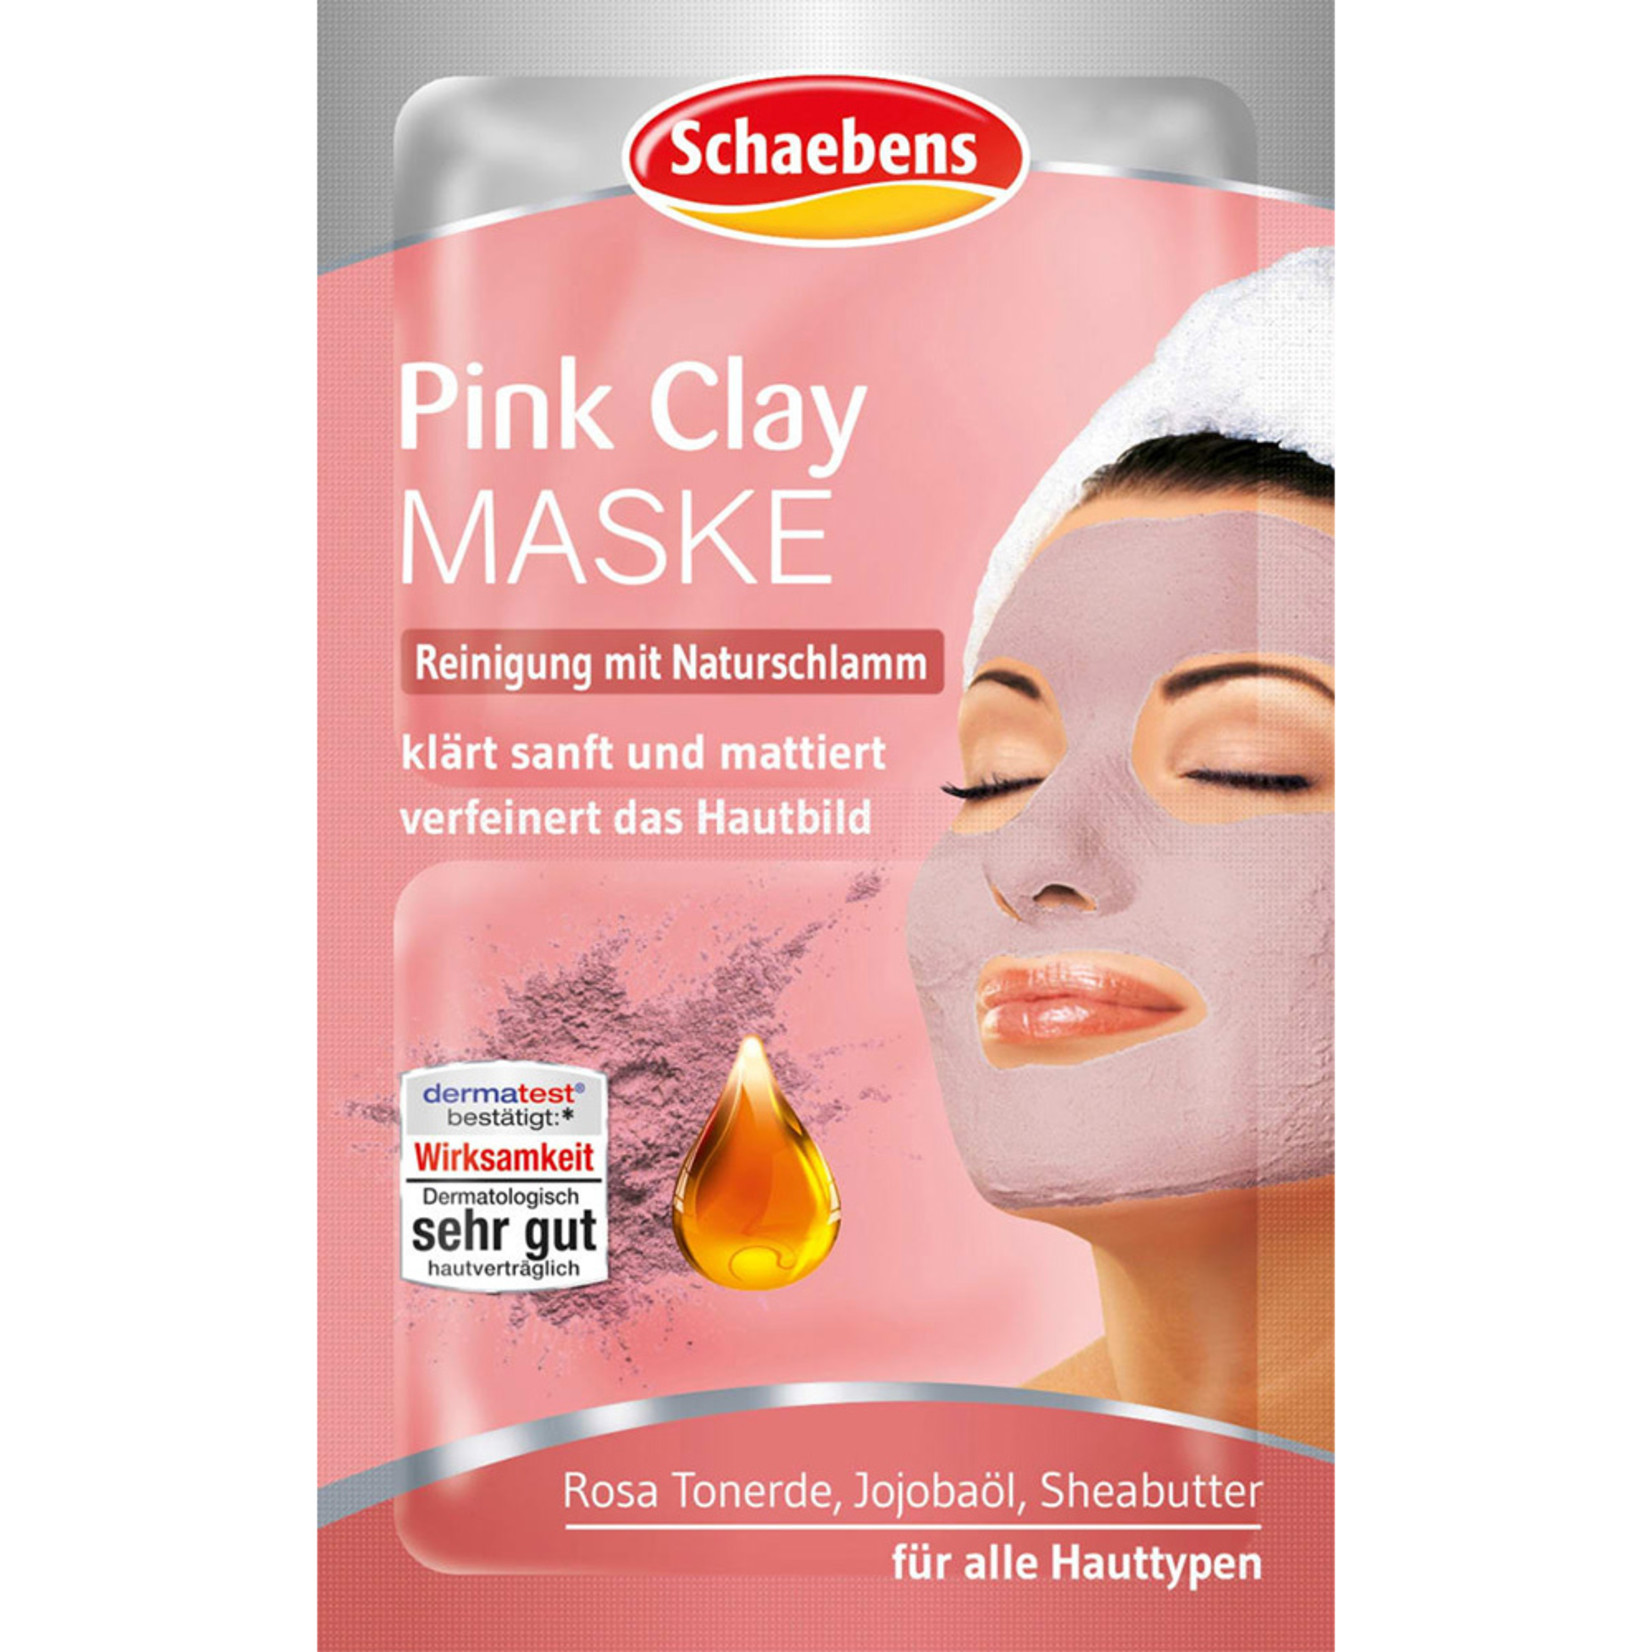 https://cdn.webshopapp.com/shops/300211/files/374100259/1652x1652x2/pink-clay-mask.jpg